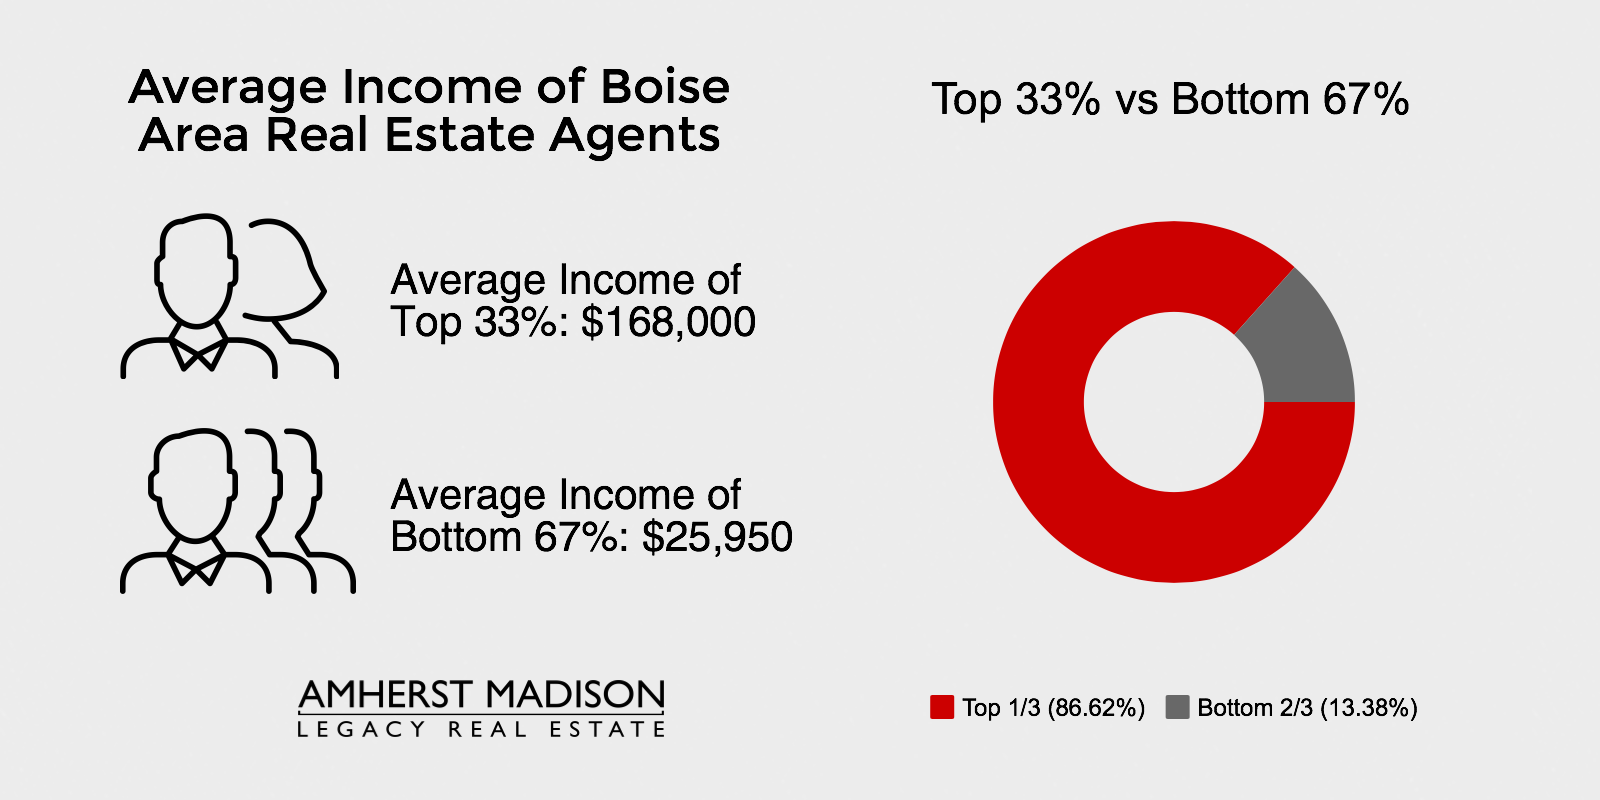 Average Income of Boise Area Real Estate Agents